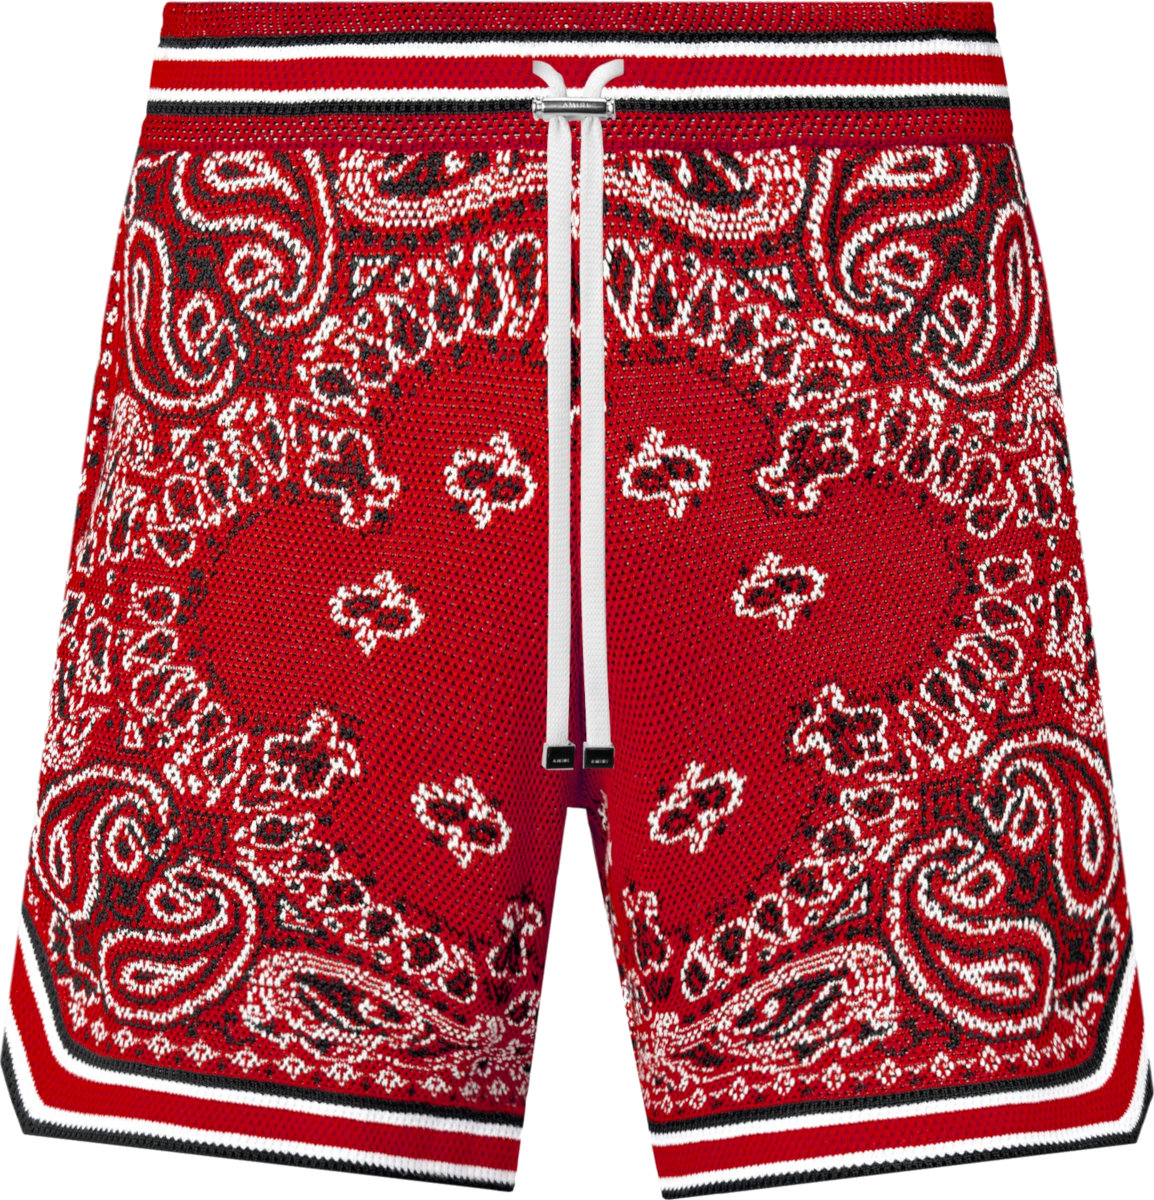 Amiri Red Bandana Crocheted Shorts | Incorporated Style